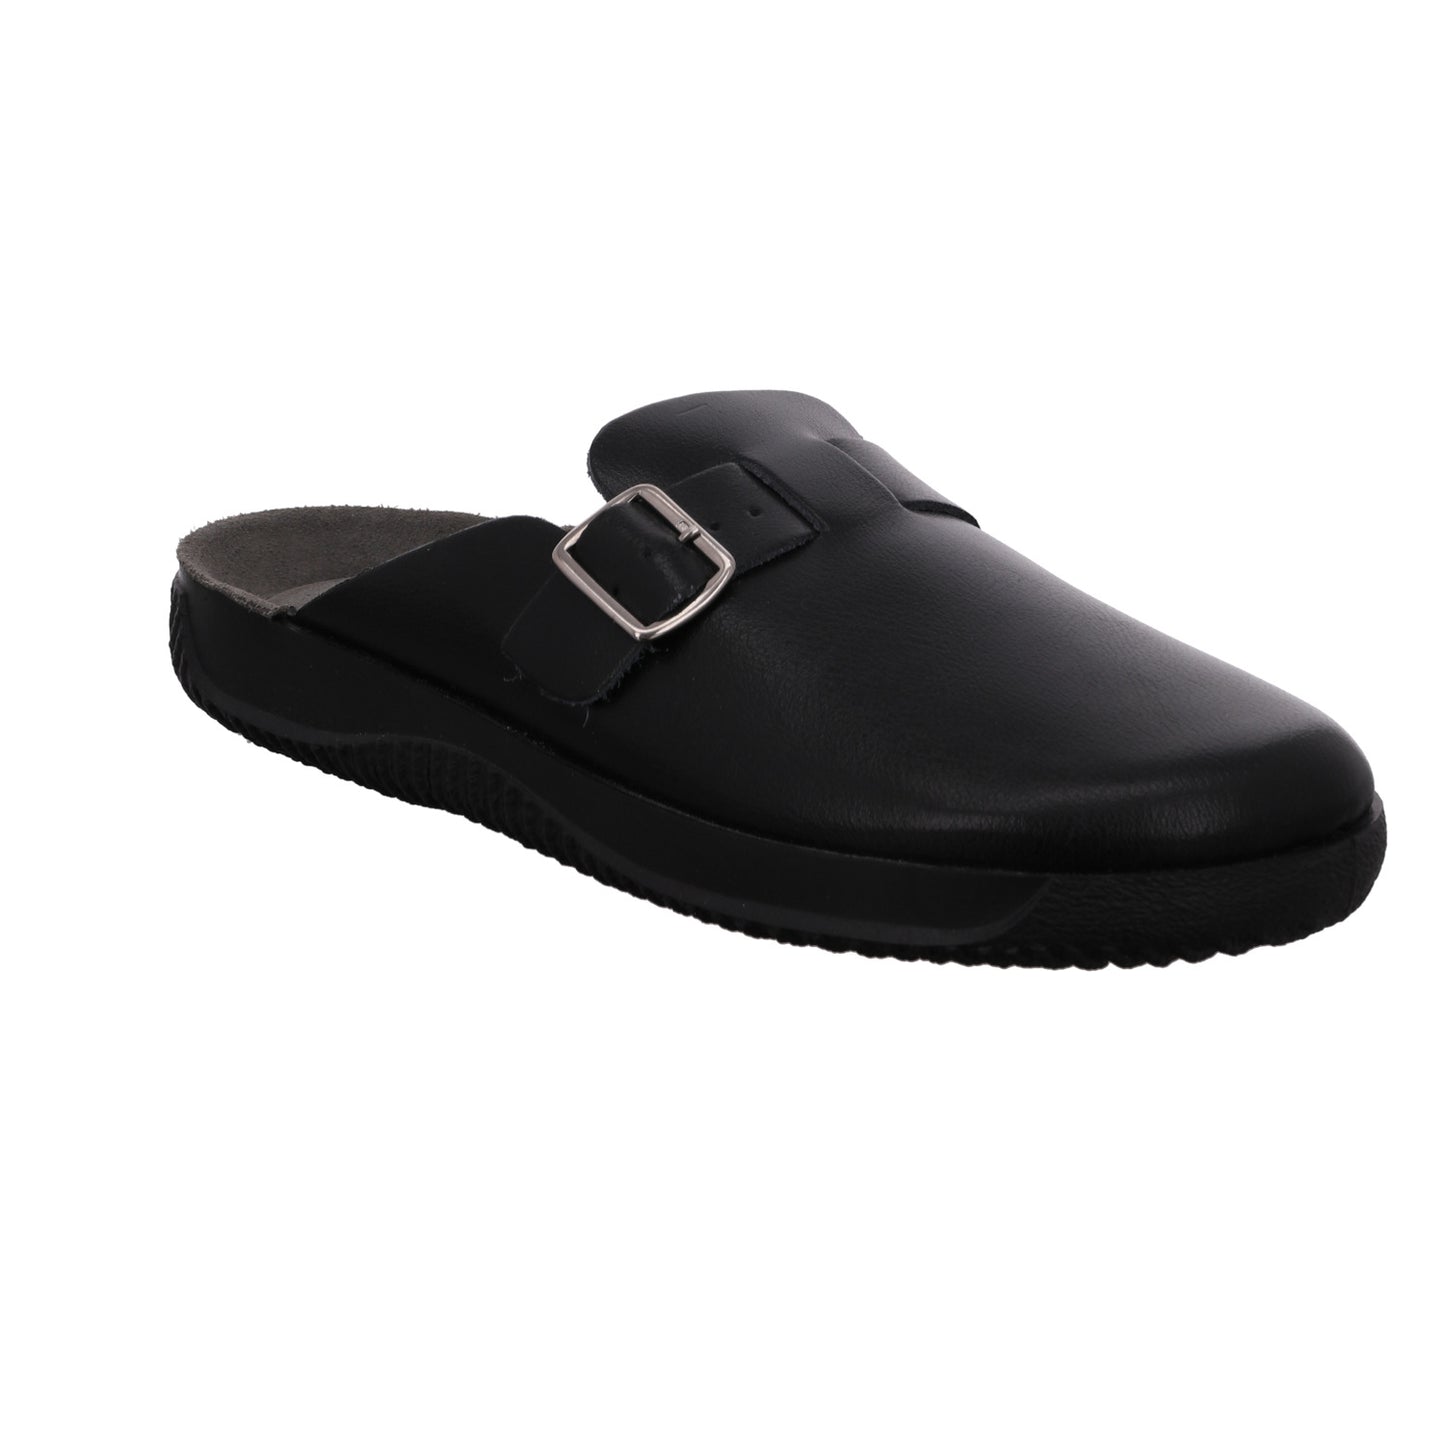 Rohde 1970-90 Black Leather Slip On Mule Sandals